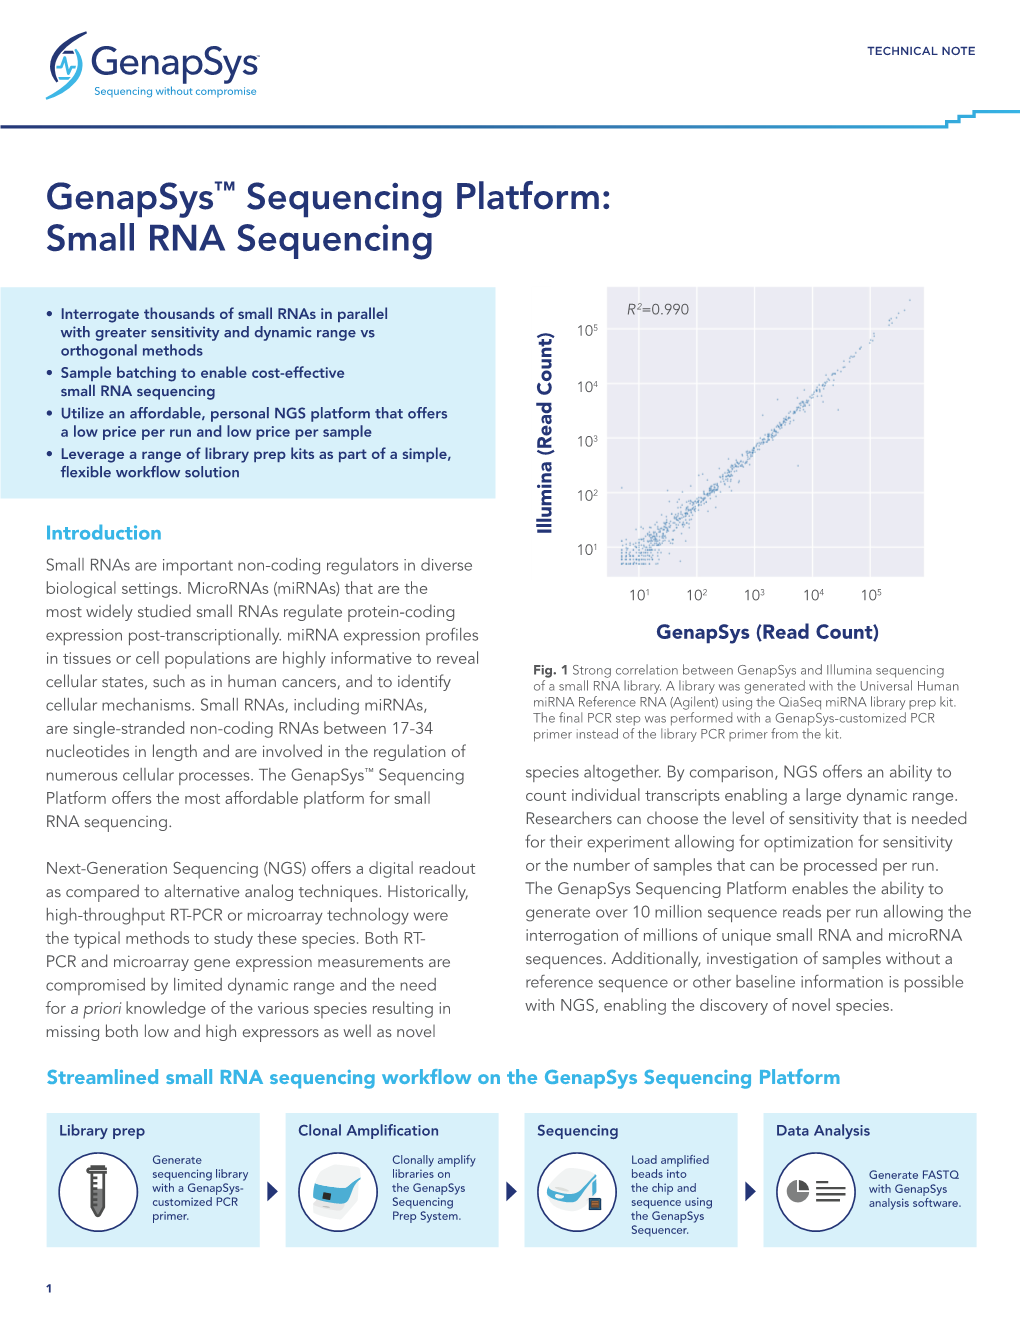 Genapsys™ Sequencing Platform: Small RNA Sequencing